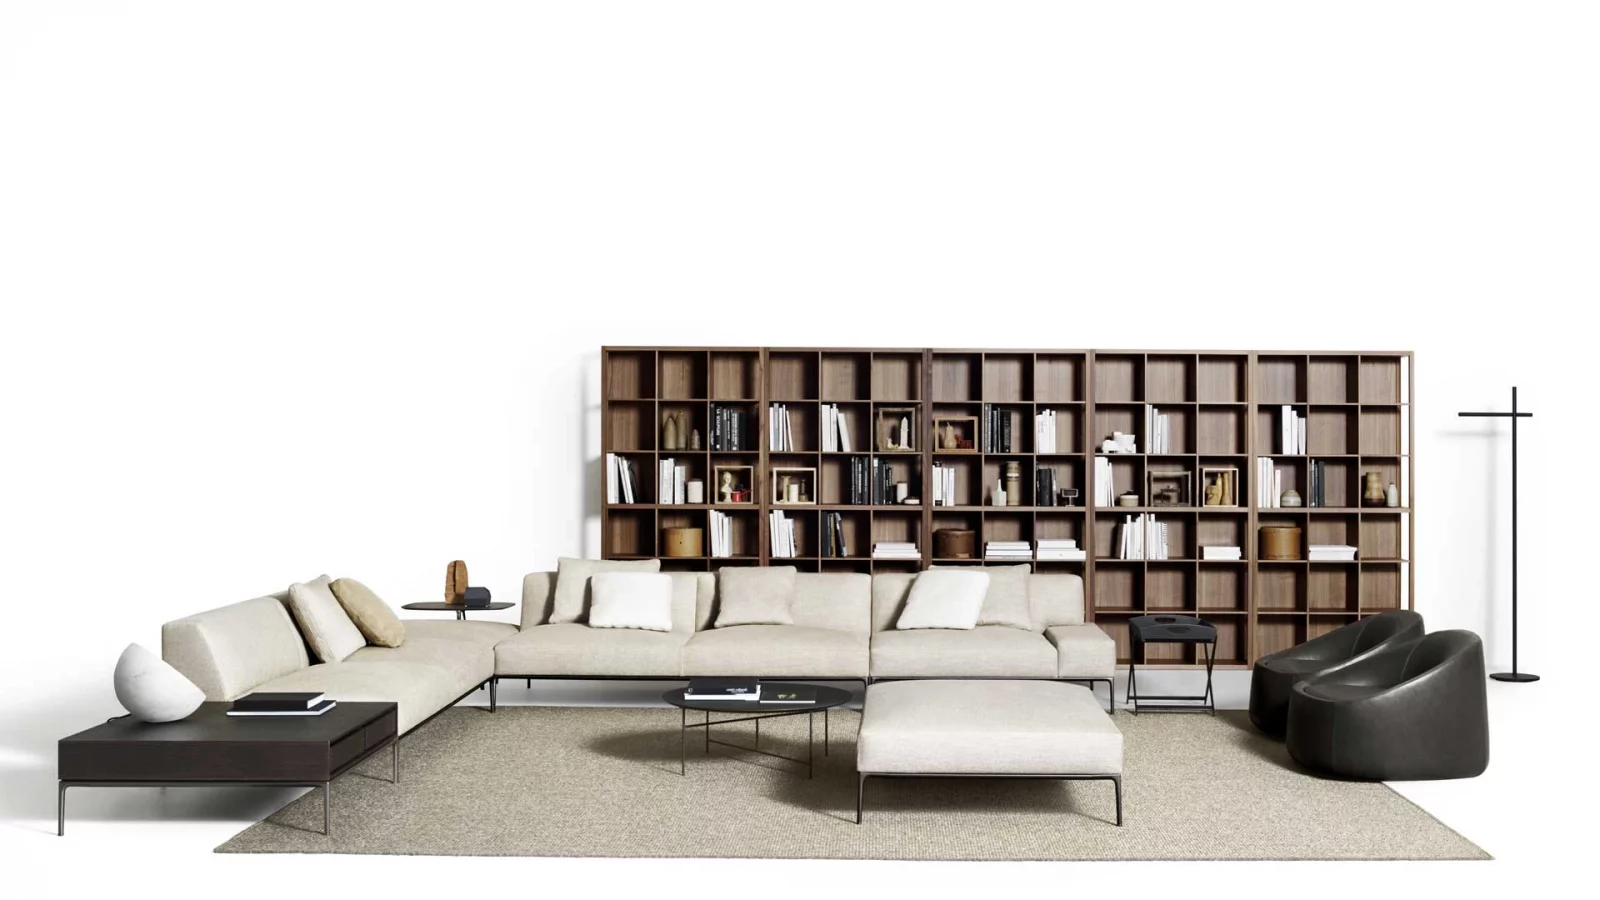 depadova-horizontal-sofa-edition-sofa-featured-image